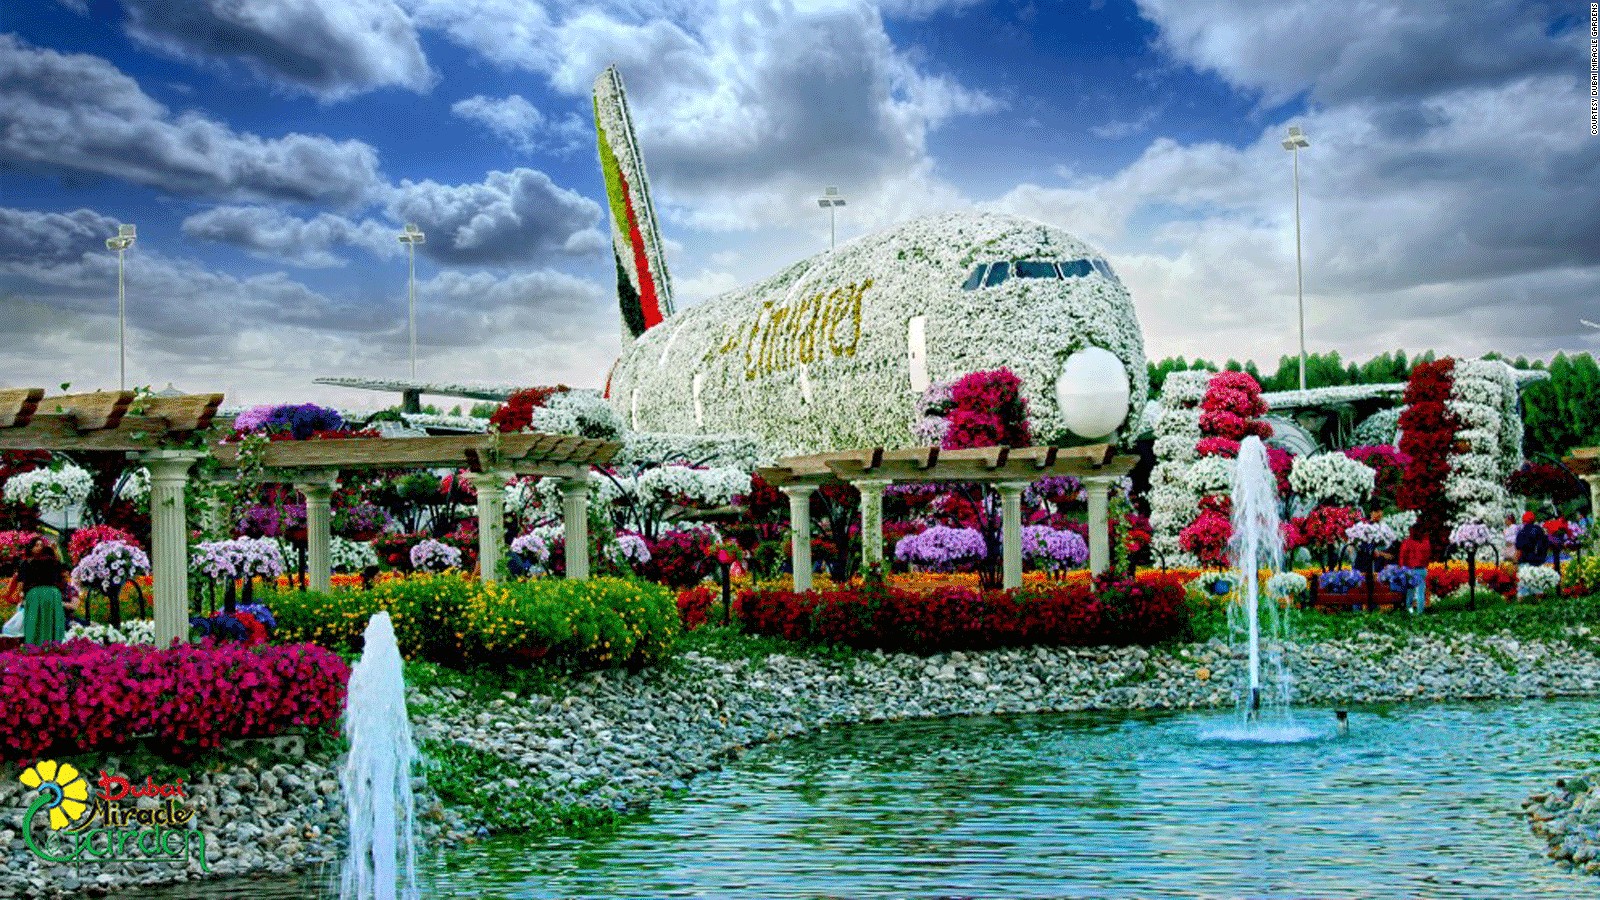 dubai miracle garden: world's largest flower garden | cnn travel